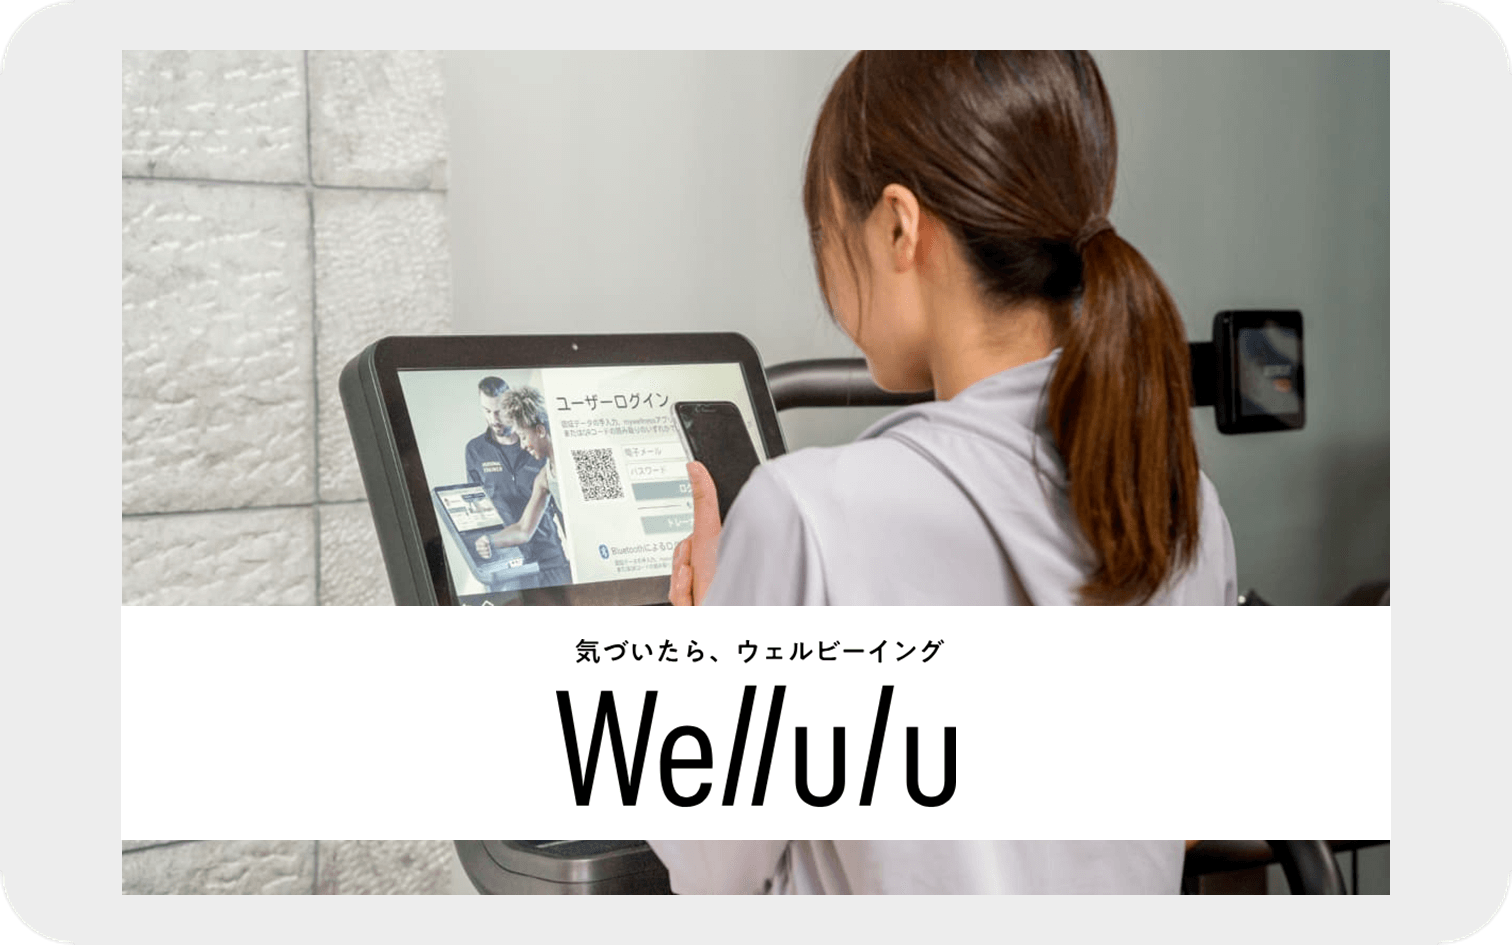 Wellulu